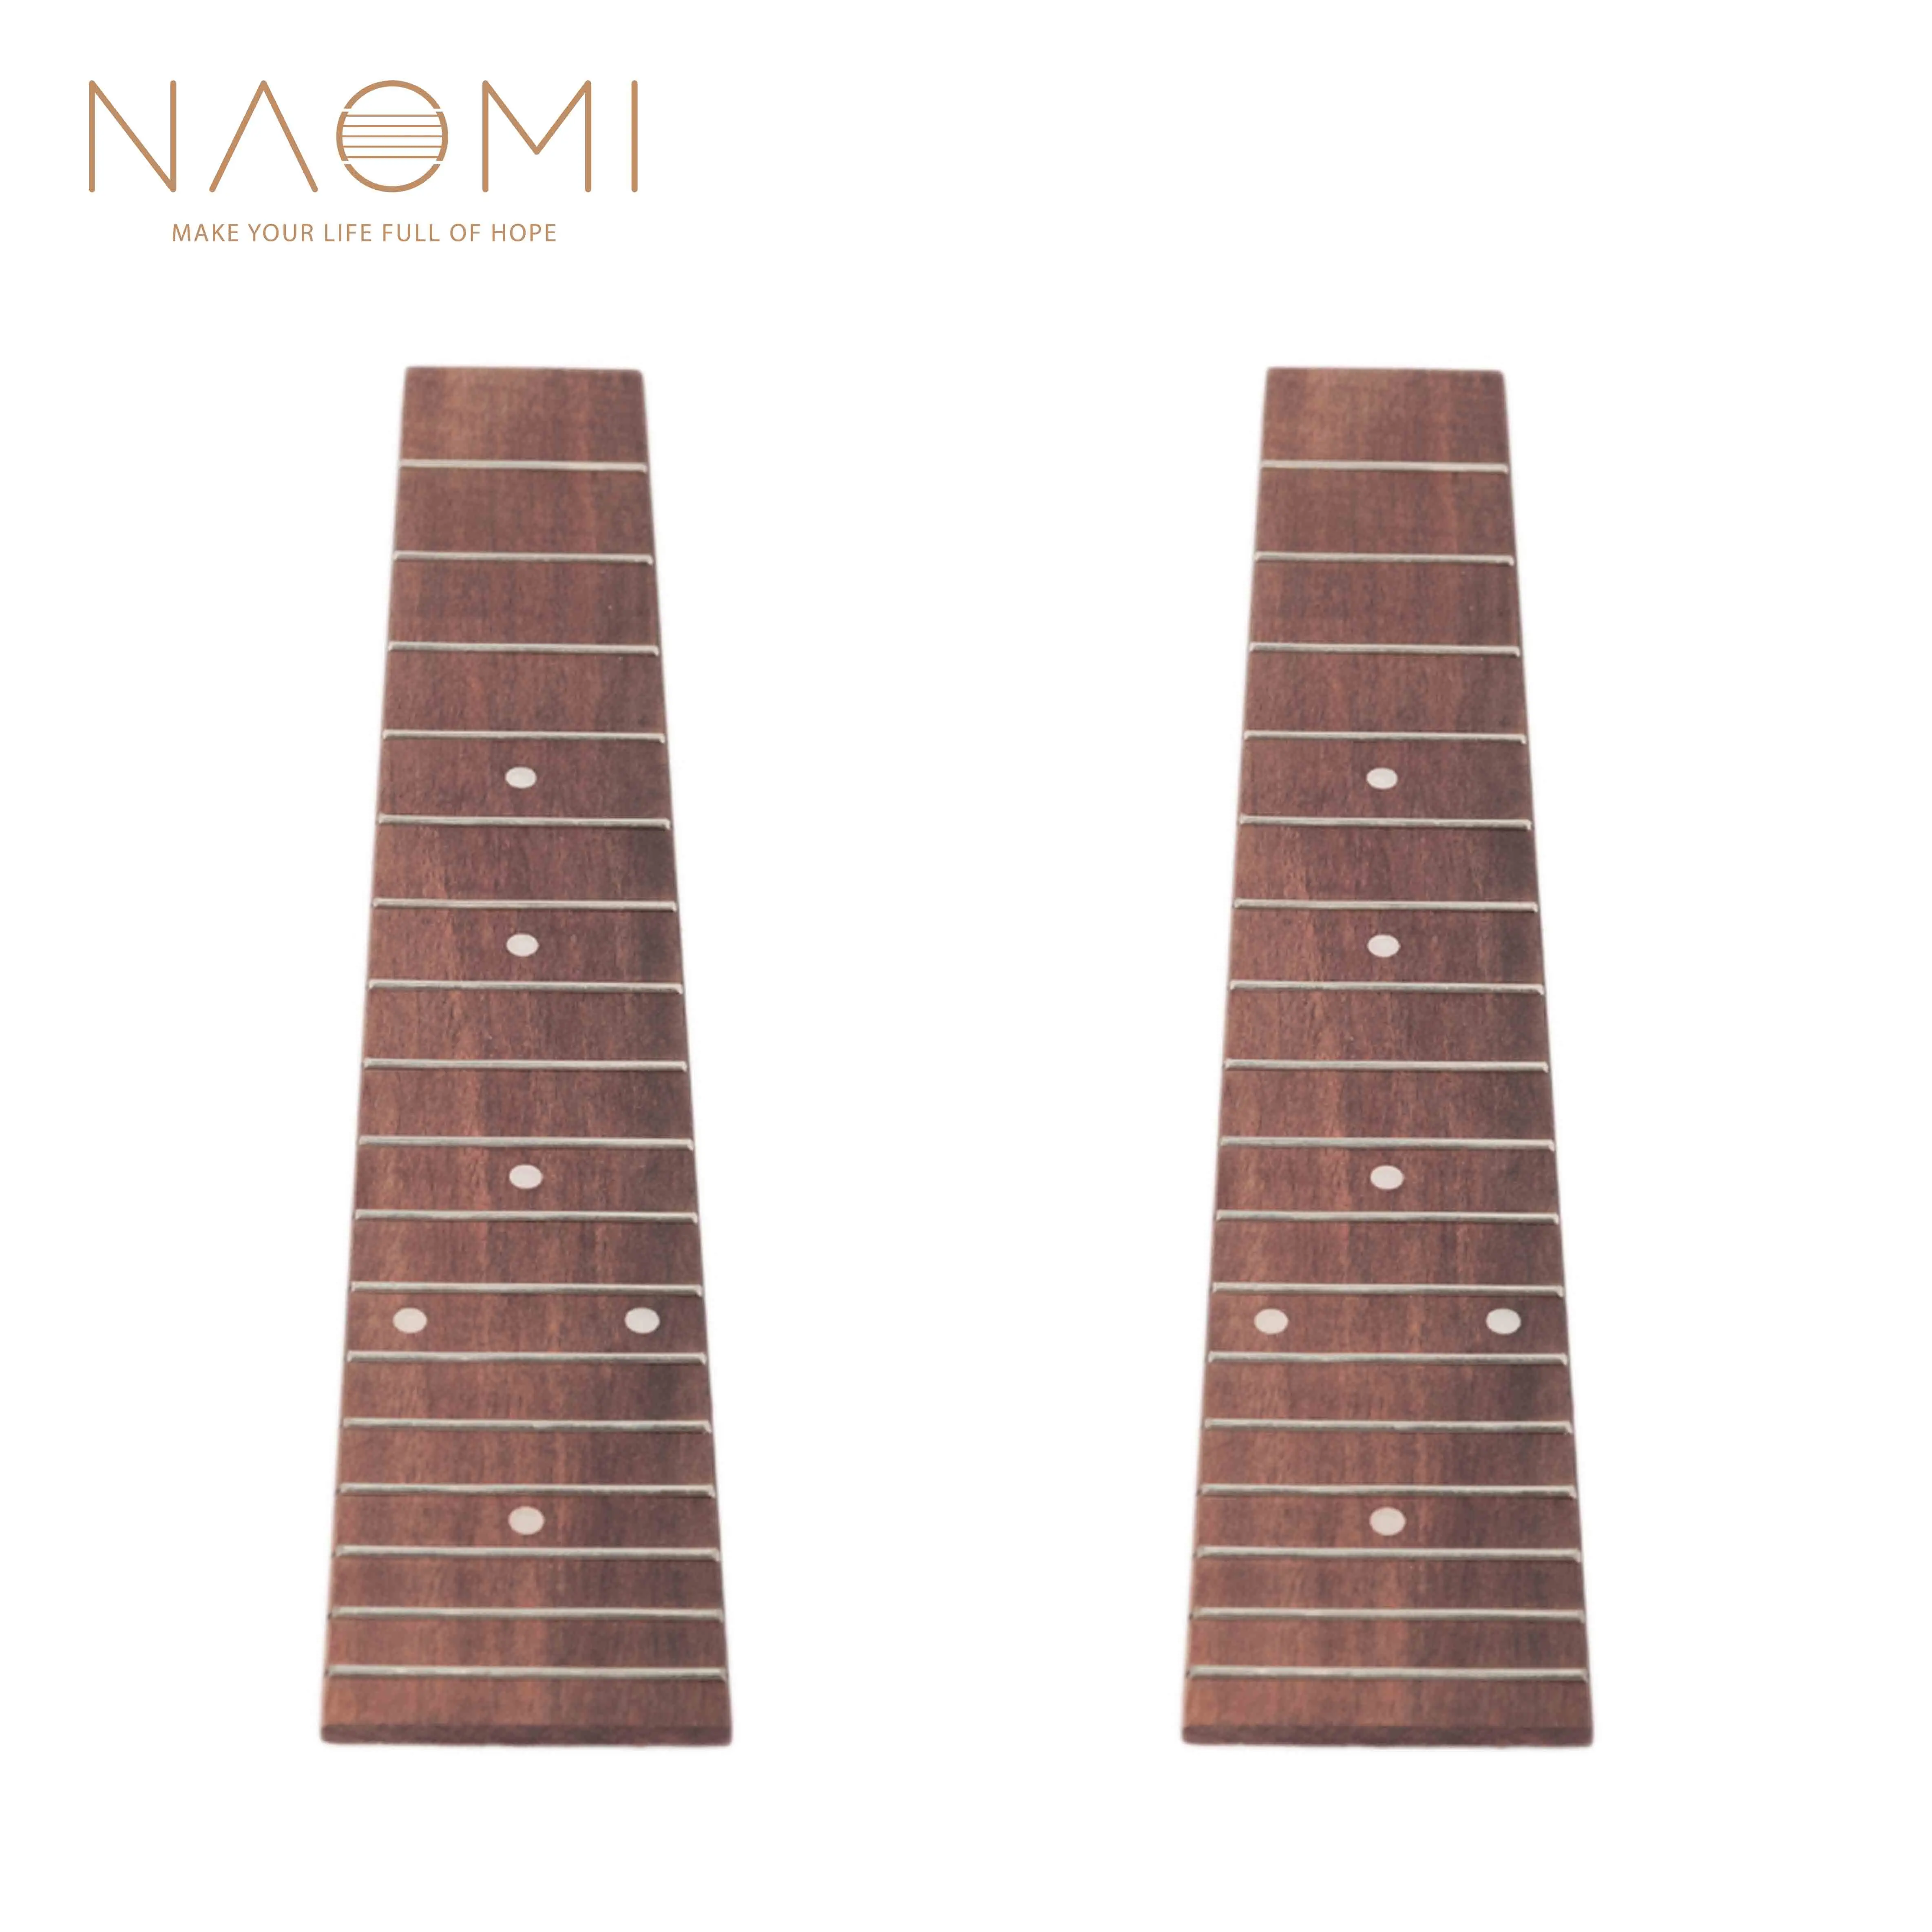 

NAOMI 2 Pcs Ukulele Fretboard 23 Inch Concert Ukulele Hawaii Guitar Wood Fretboard Fingerboard 17 Frets Guitar Parts Accessories